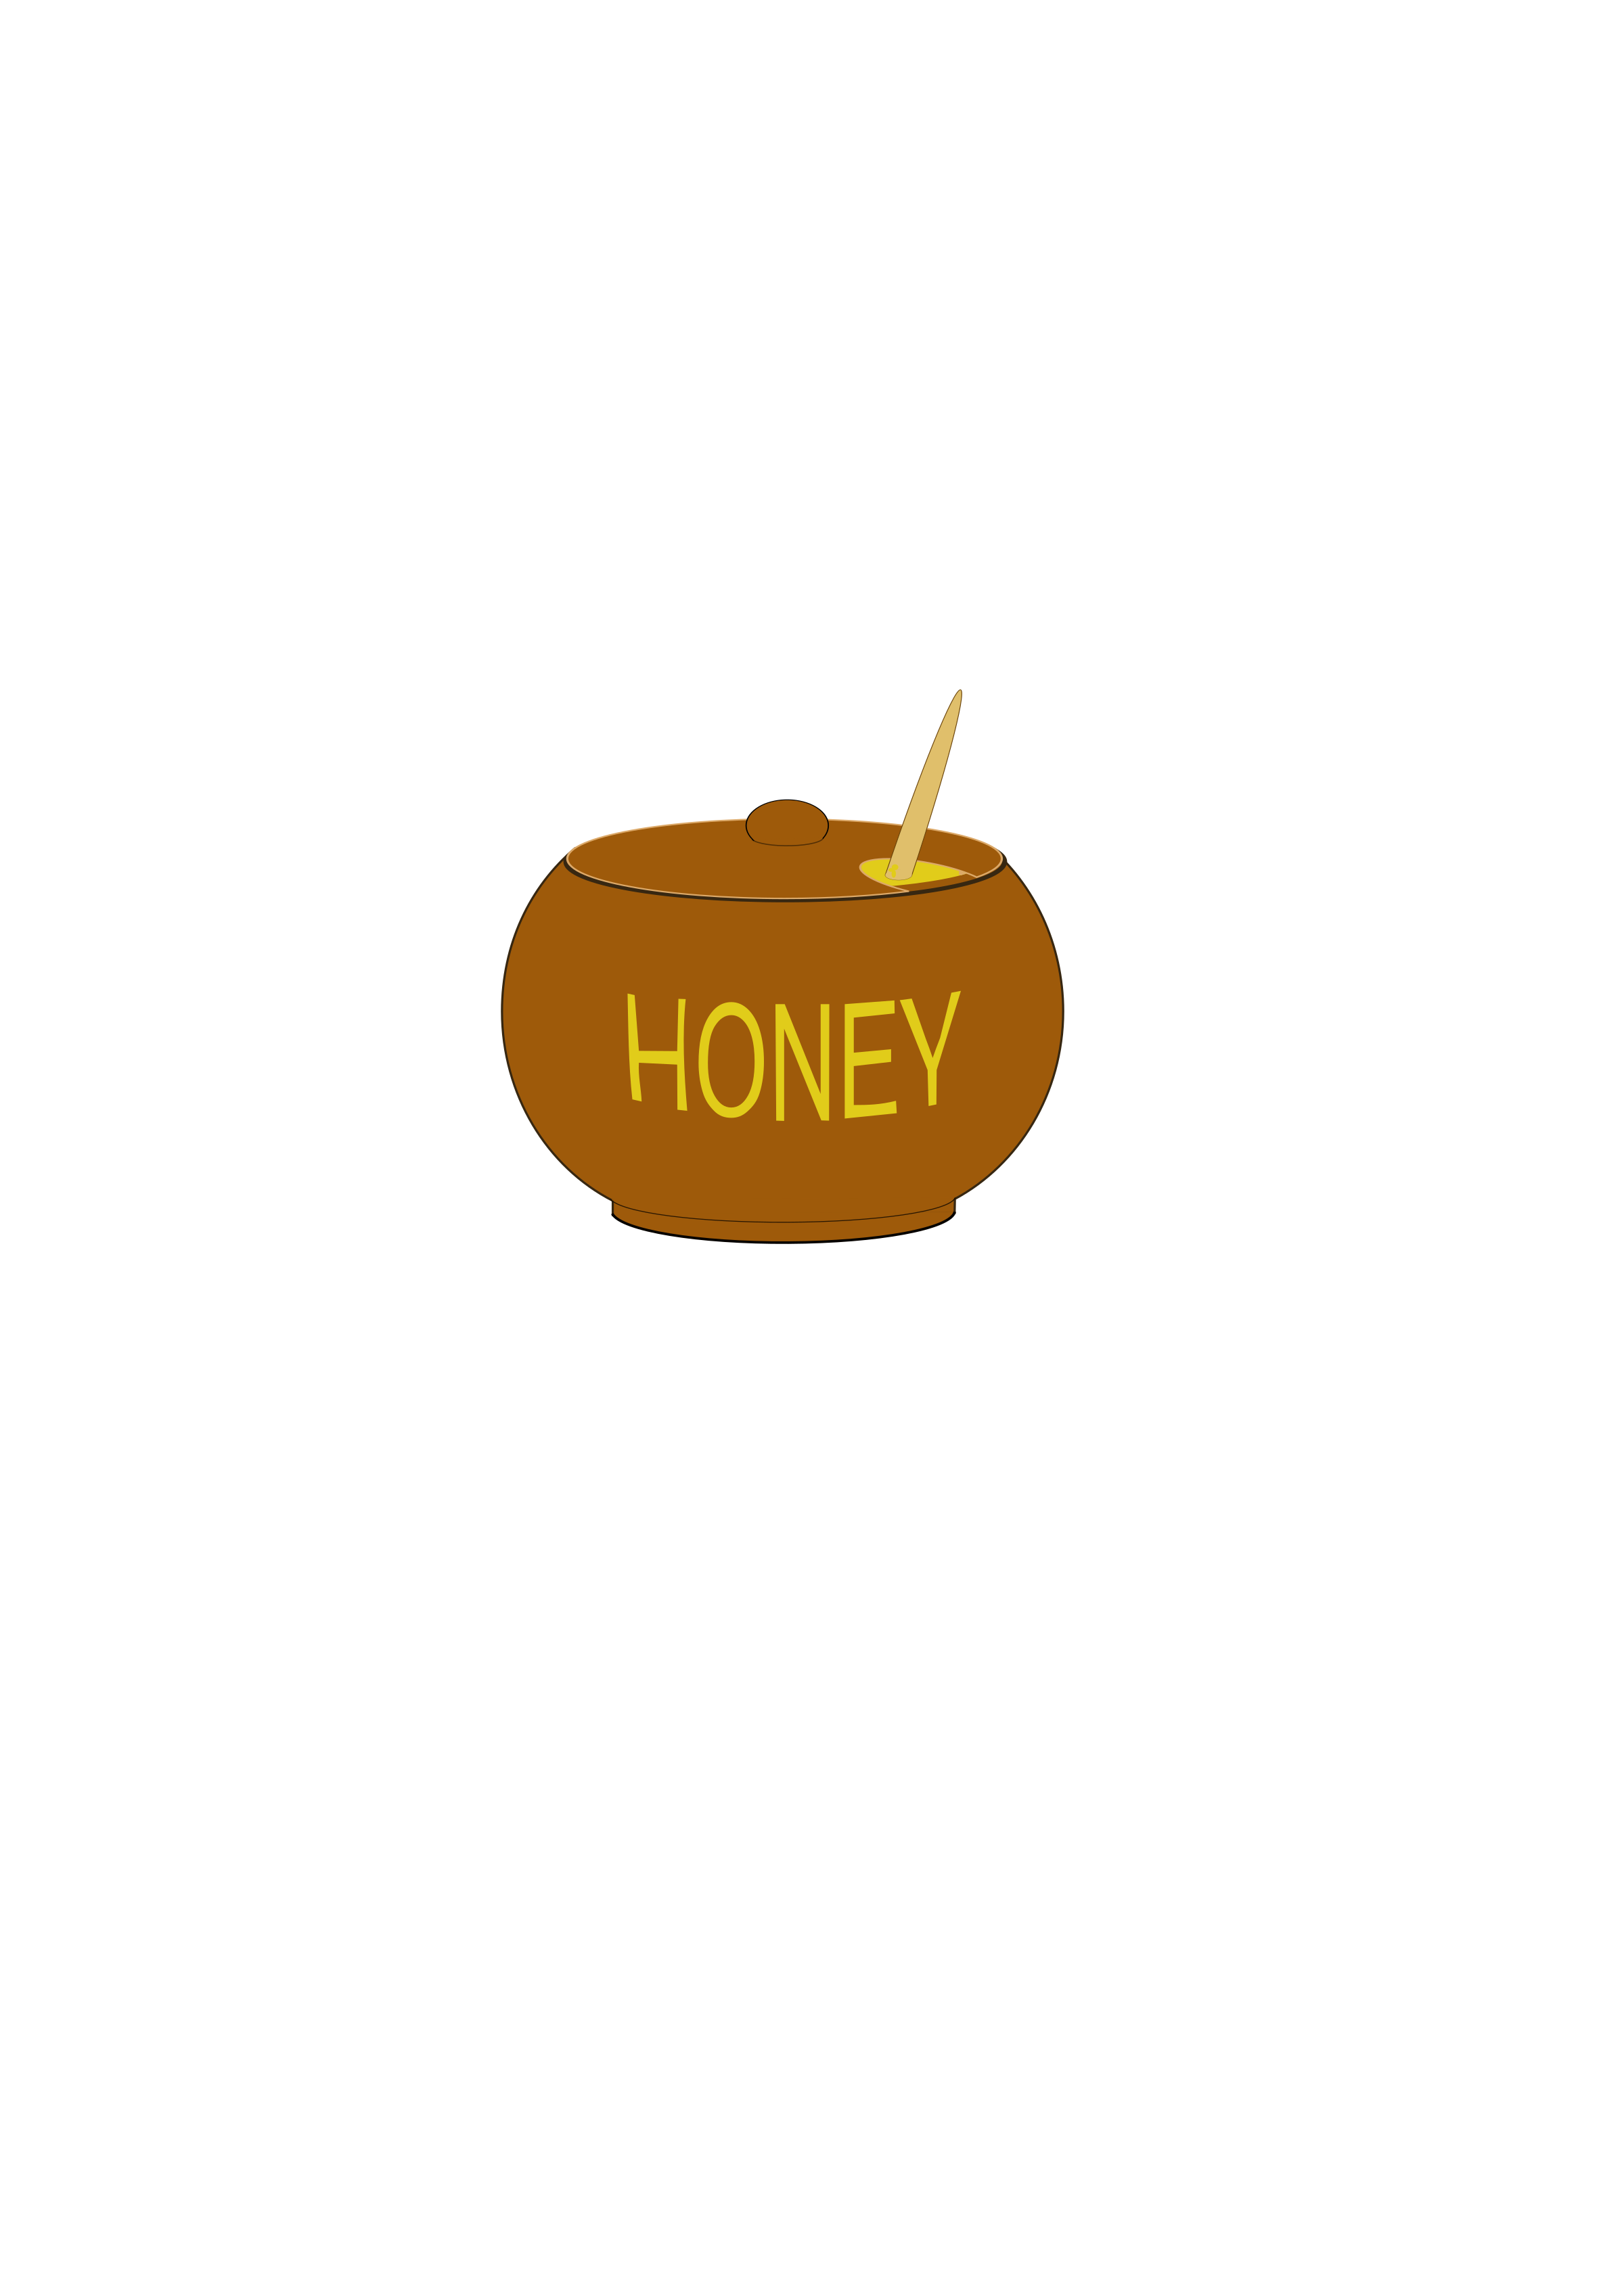 free clipart of honey - photo #45